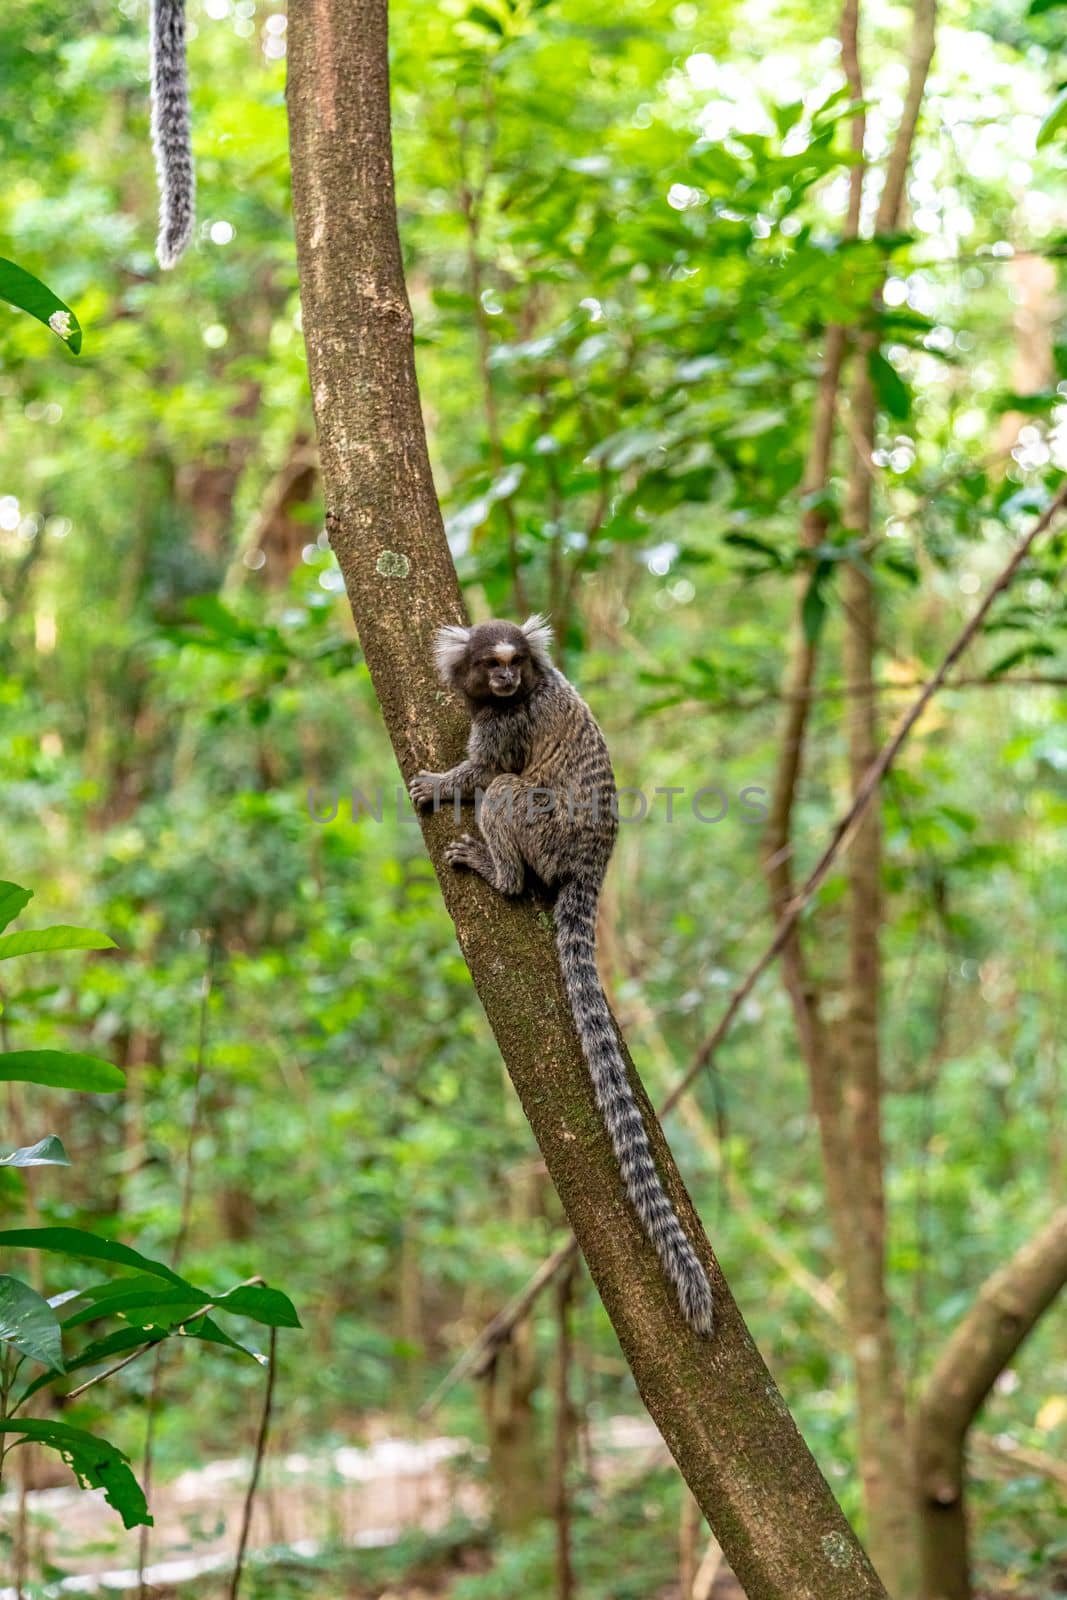 Marmoset monkey on a tree in the wild by Edophoto